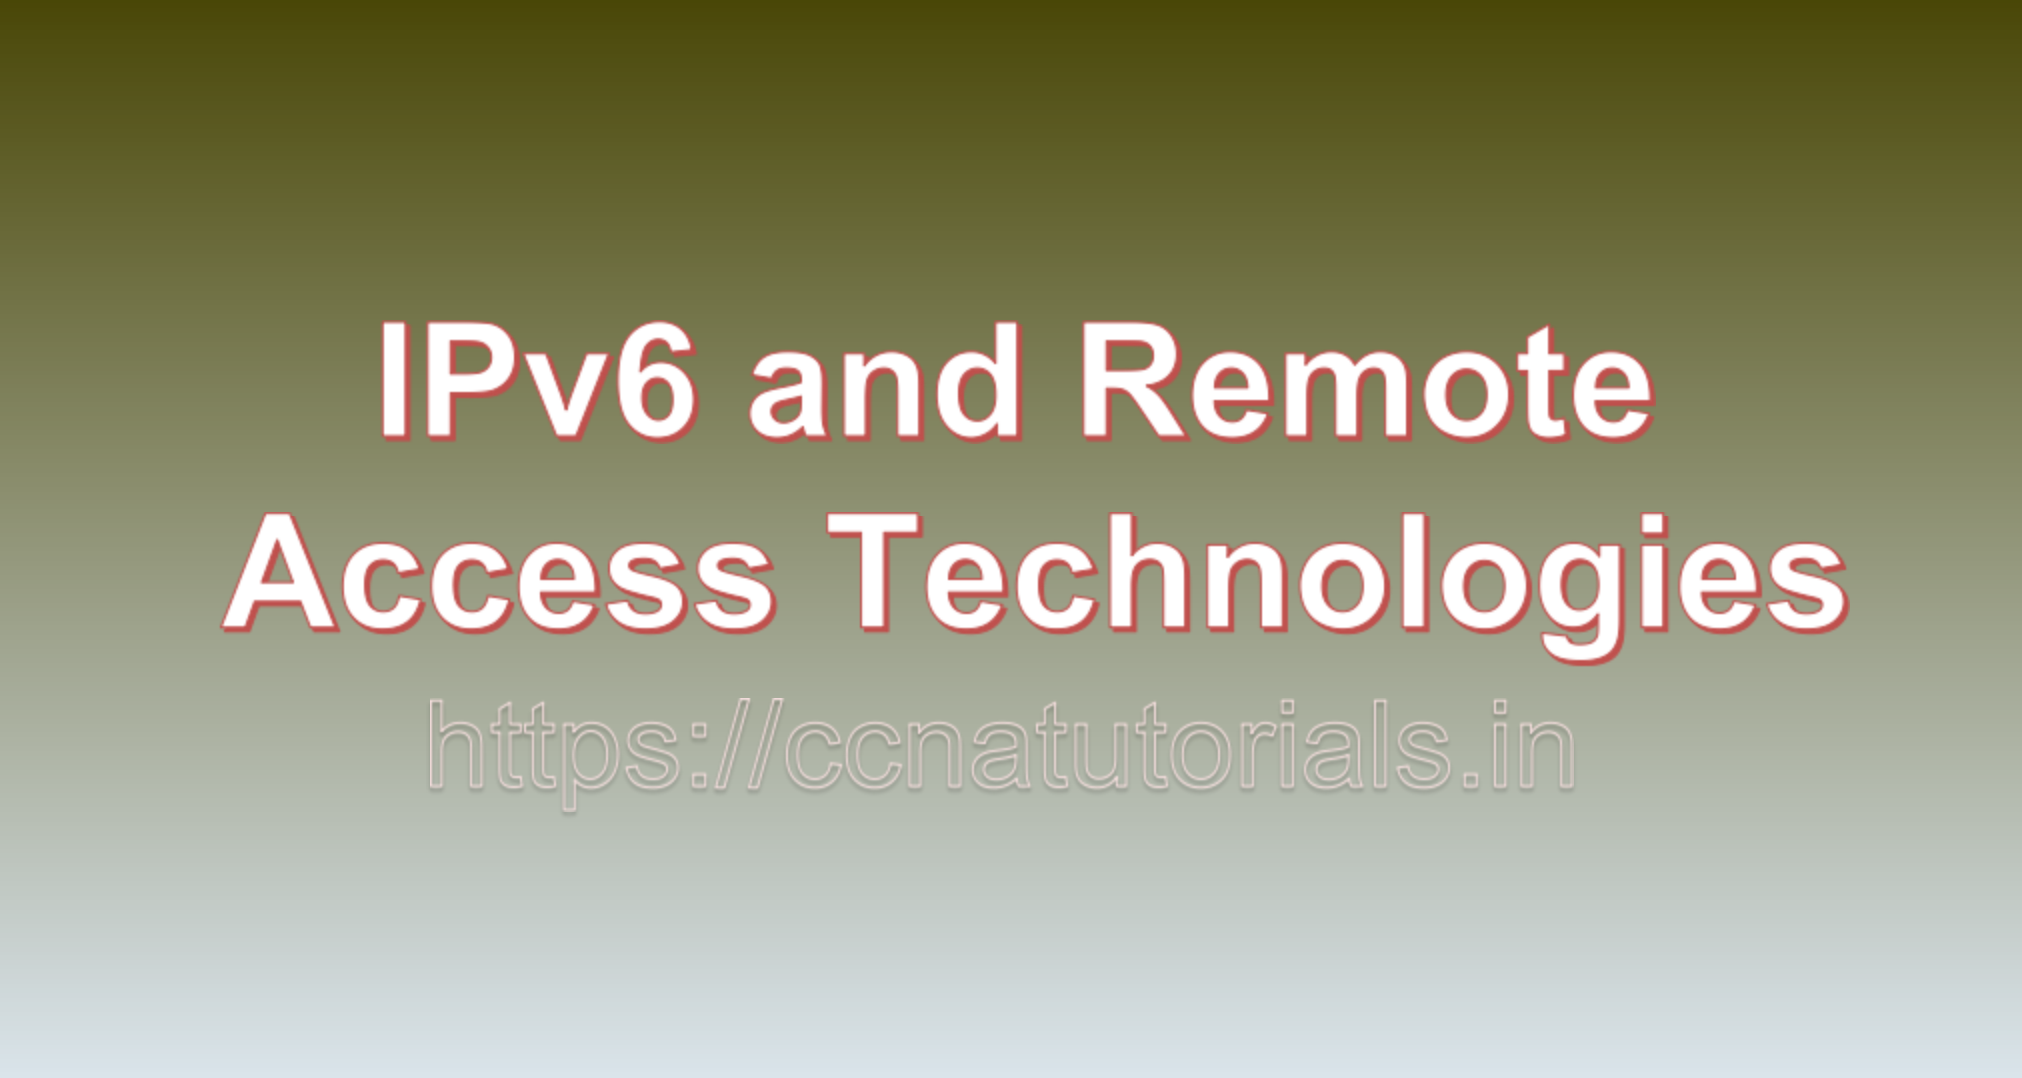 IPv6 and Remote Access Technologies, ccna, ccna tutorials